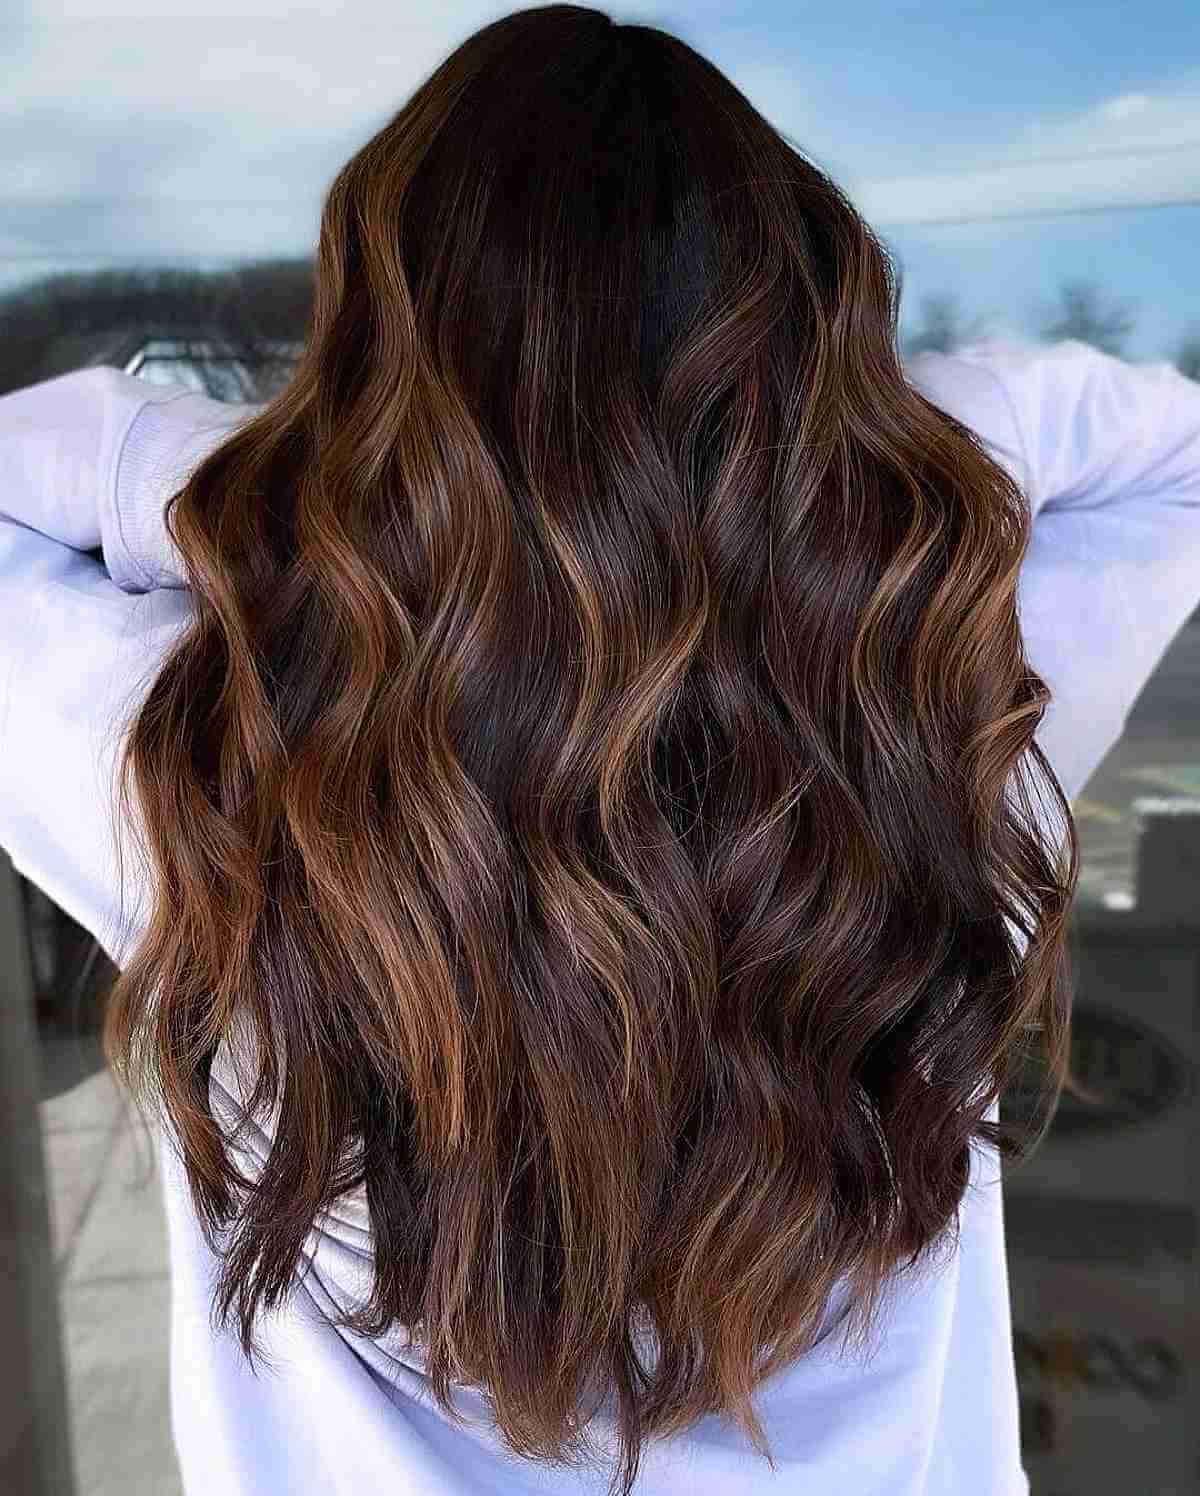 Brunette hair with caramel highlights